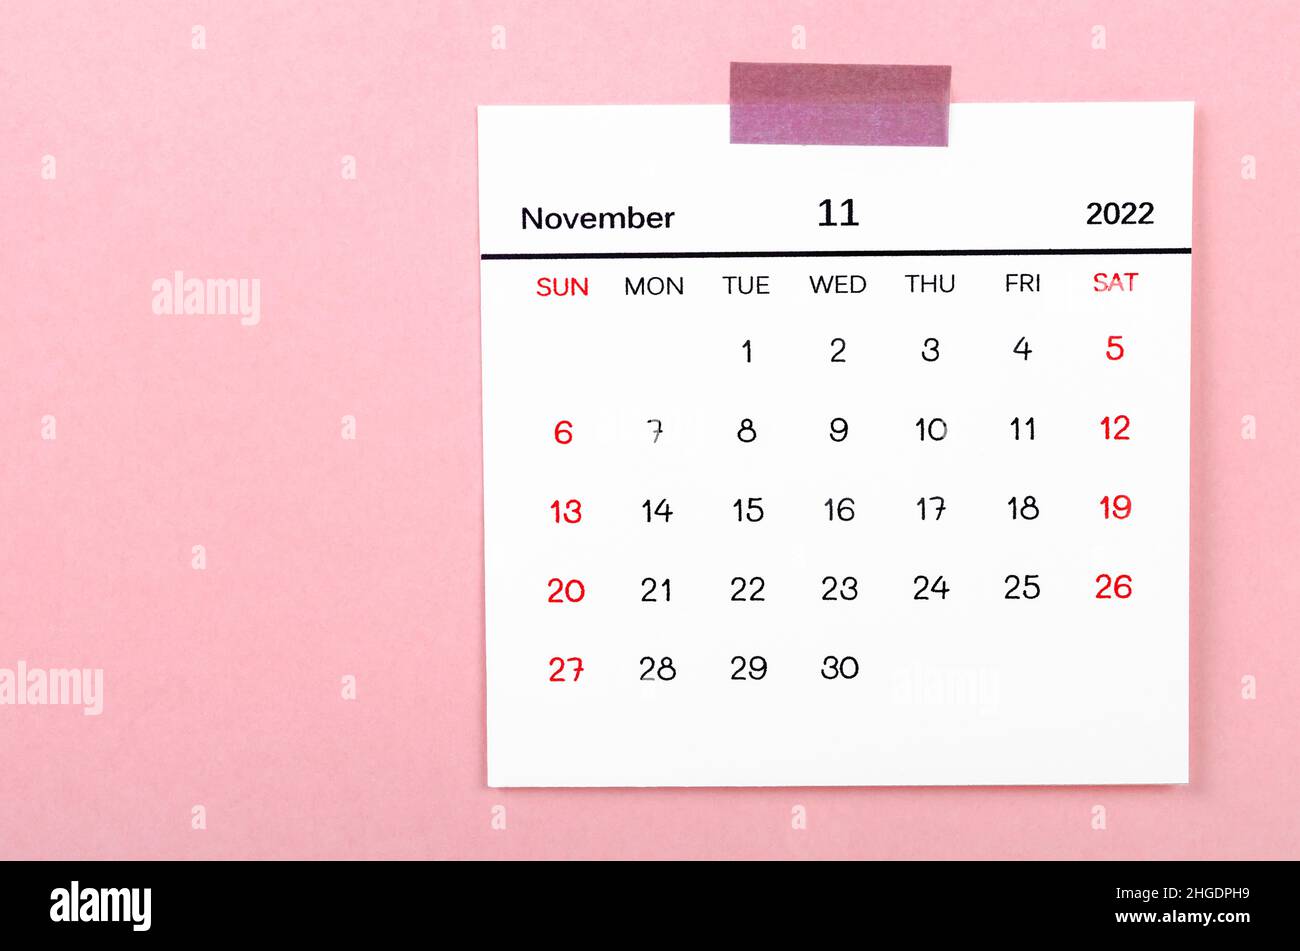 The November 2022 calendar on pink background. Stock Photo